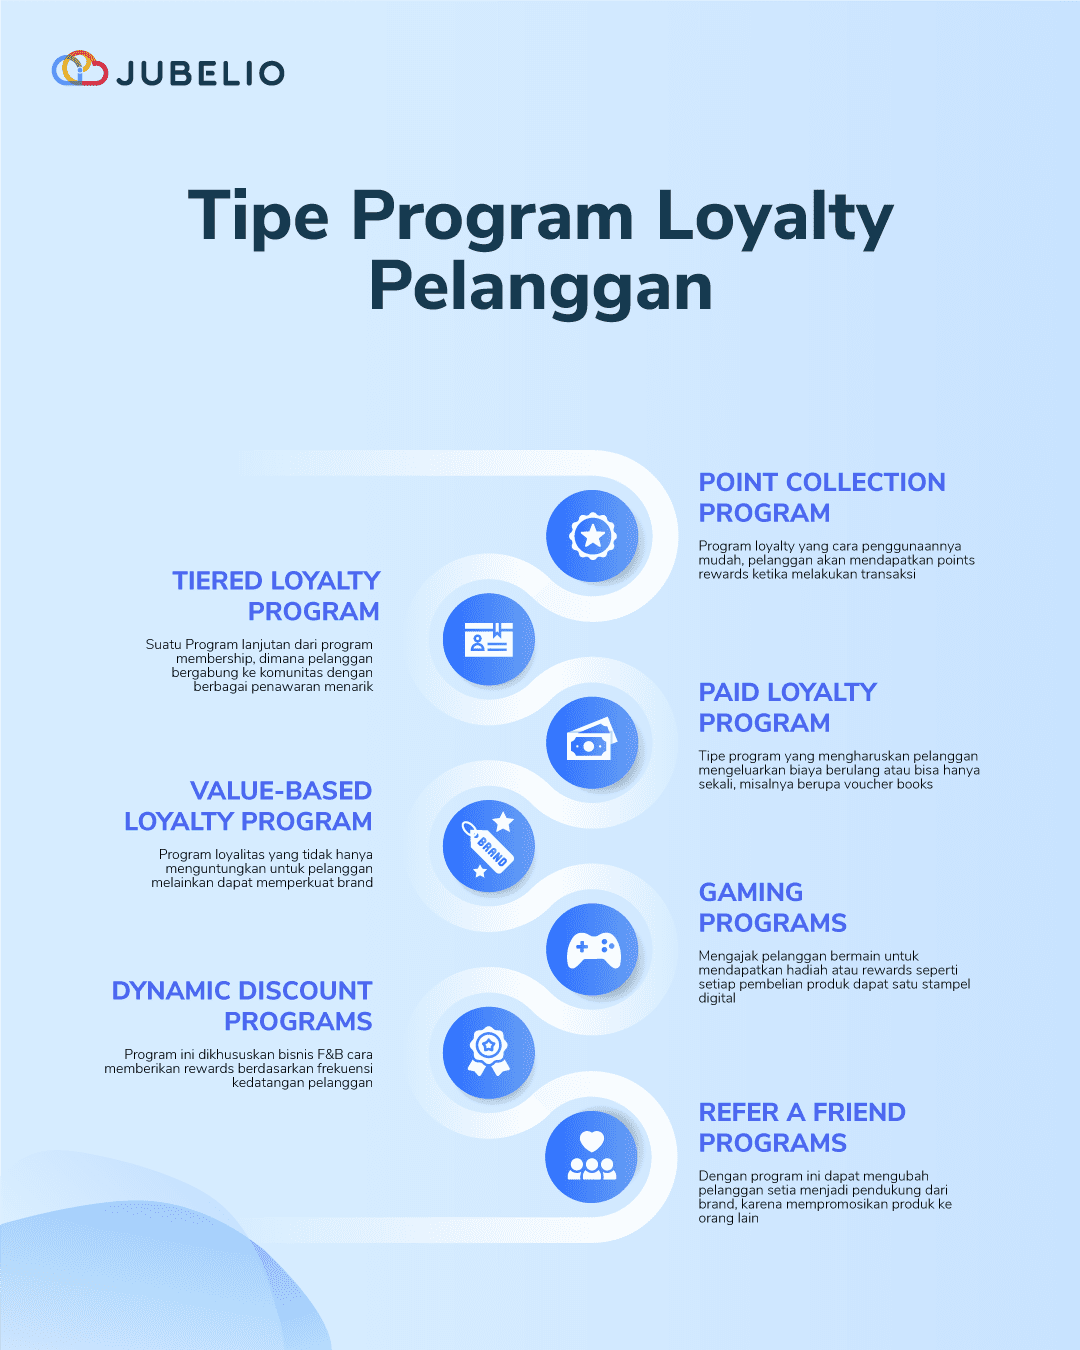 tipe program loyalitas pelanggan